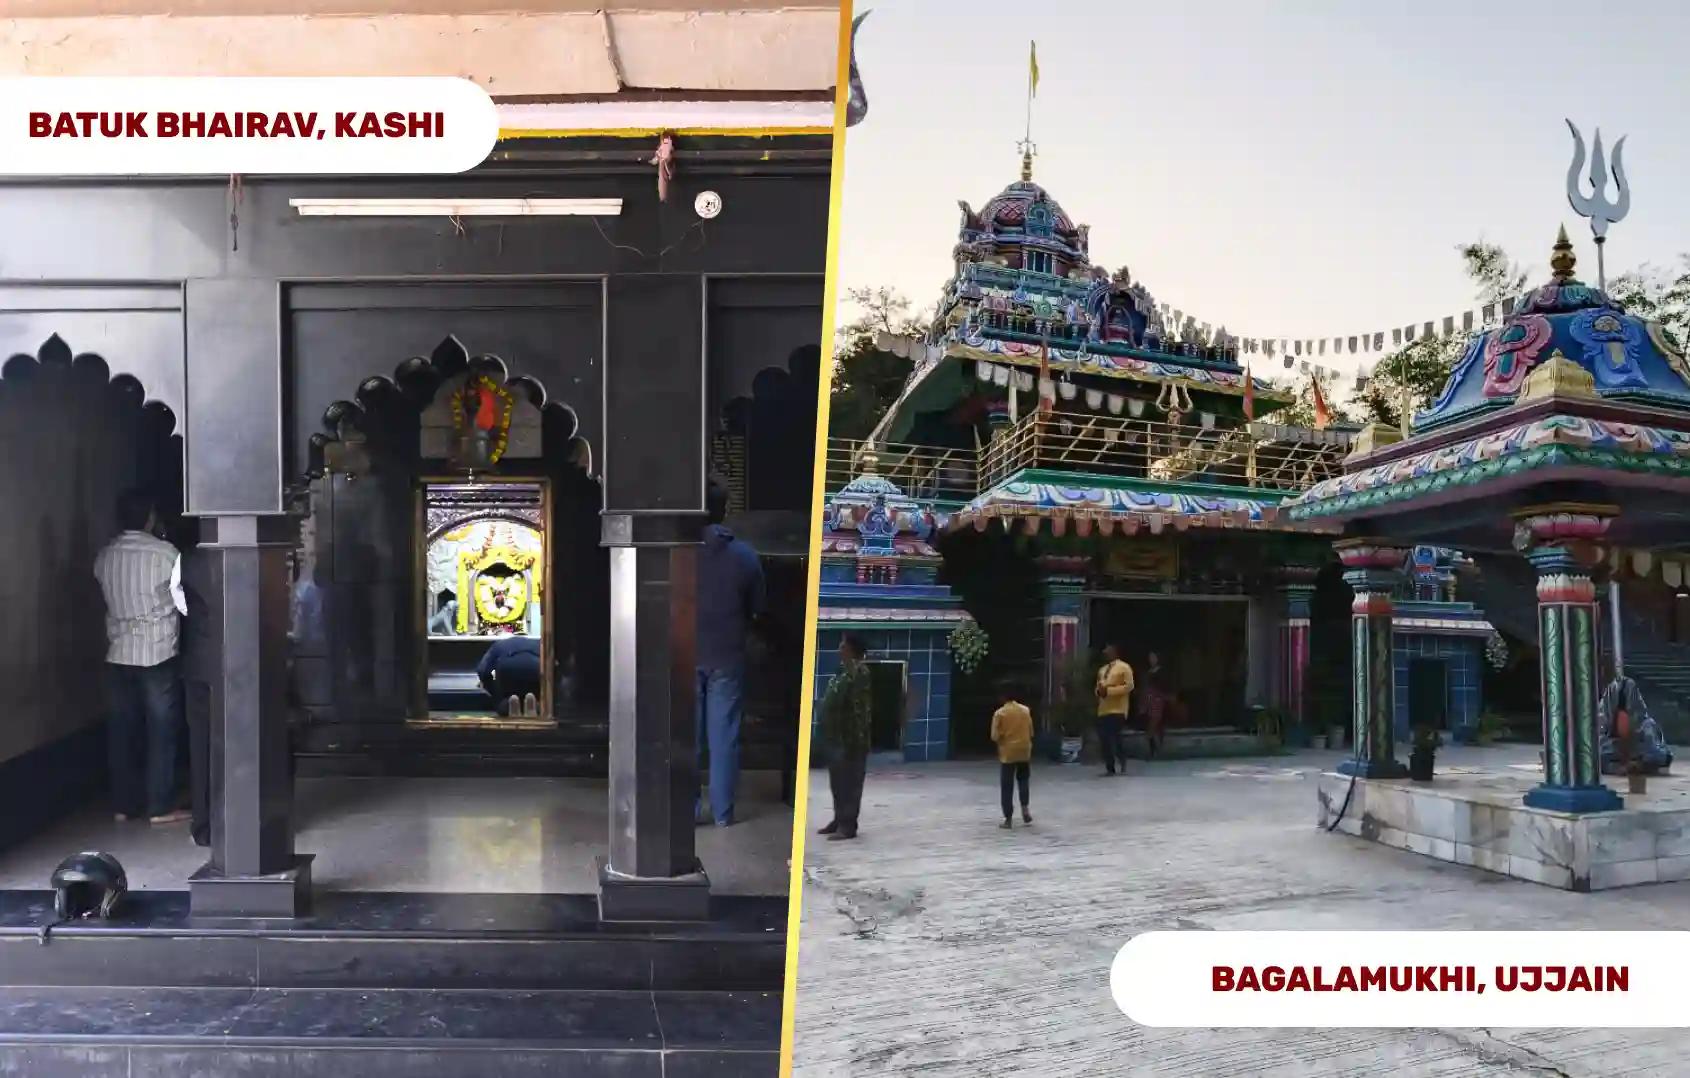 Maa Bagalamukhi Temple and Shri Batuk Bhairav Temple,Ujjain, Kashi